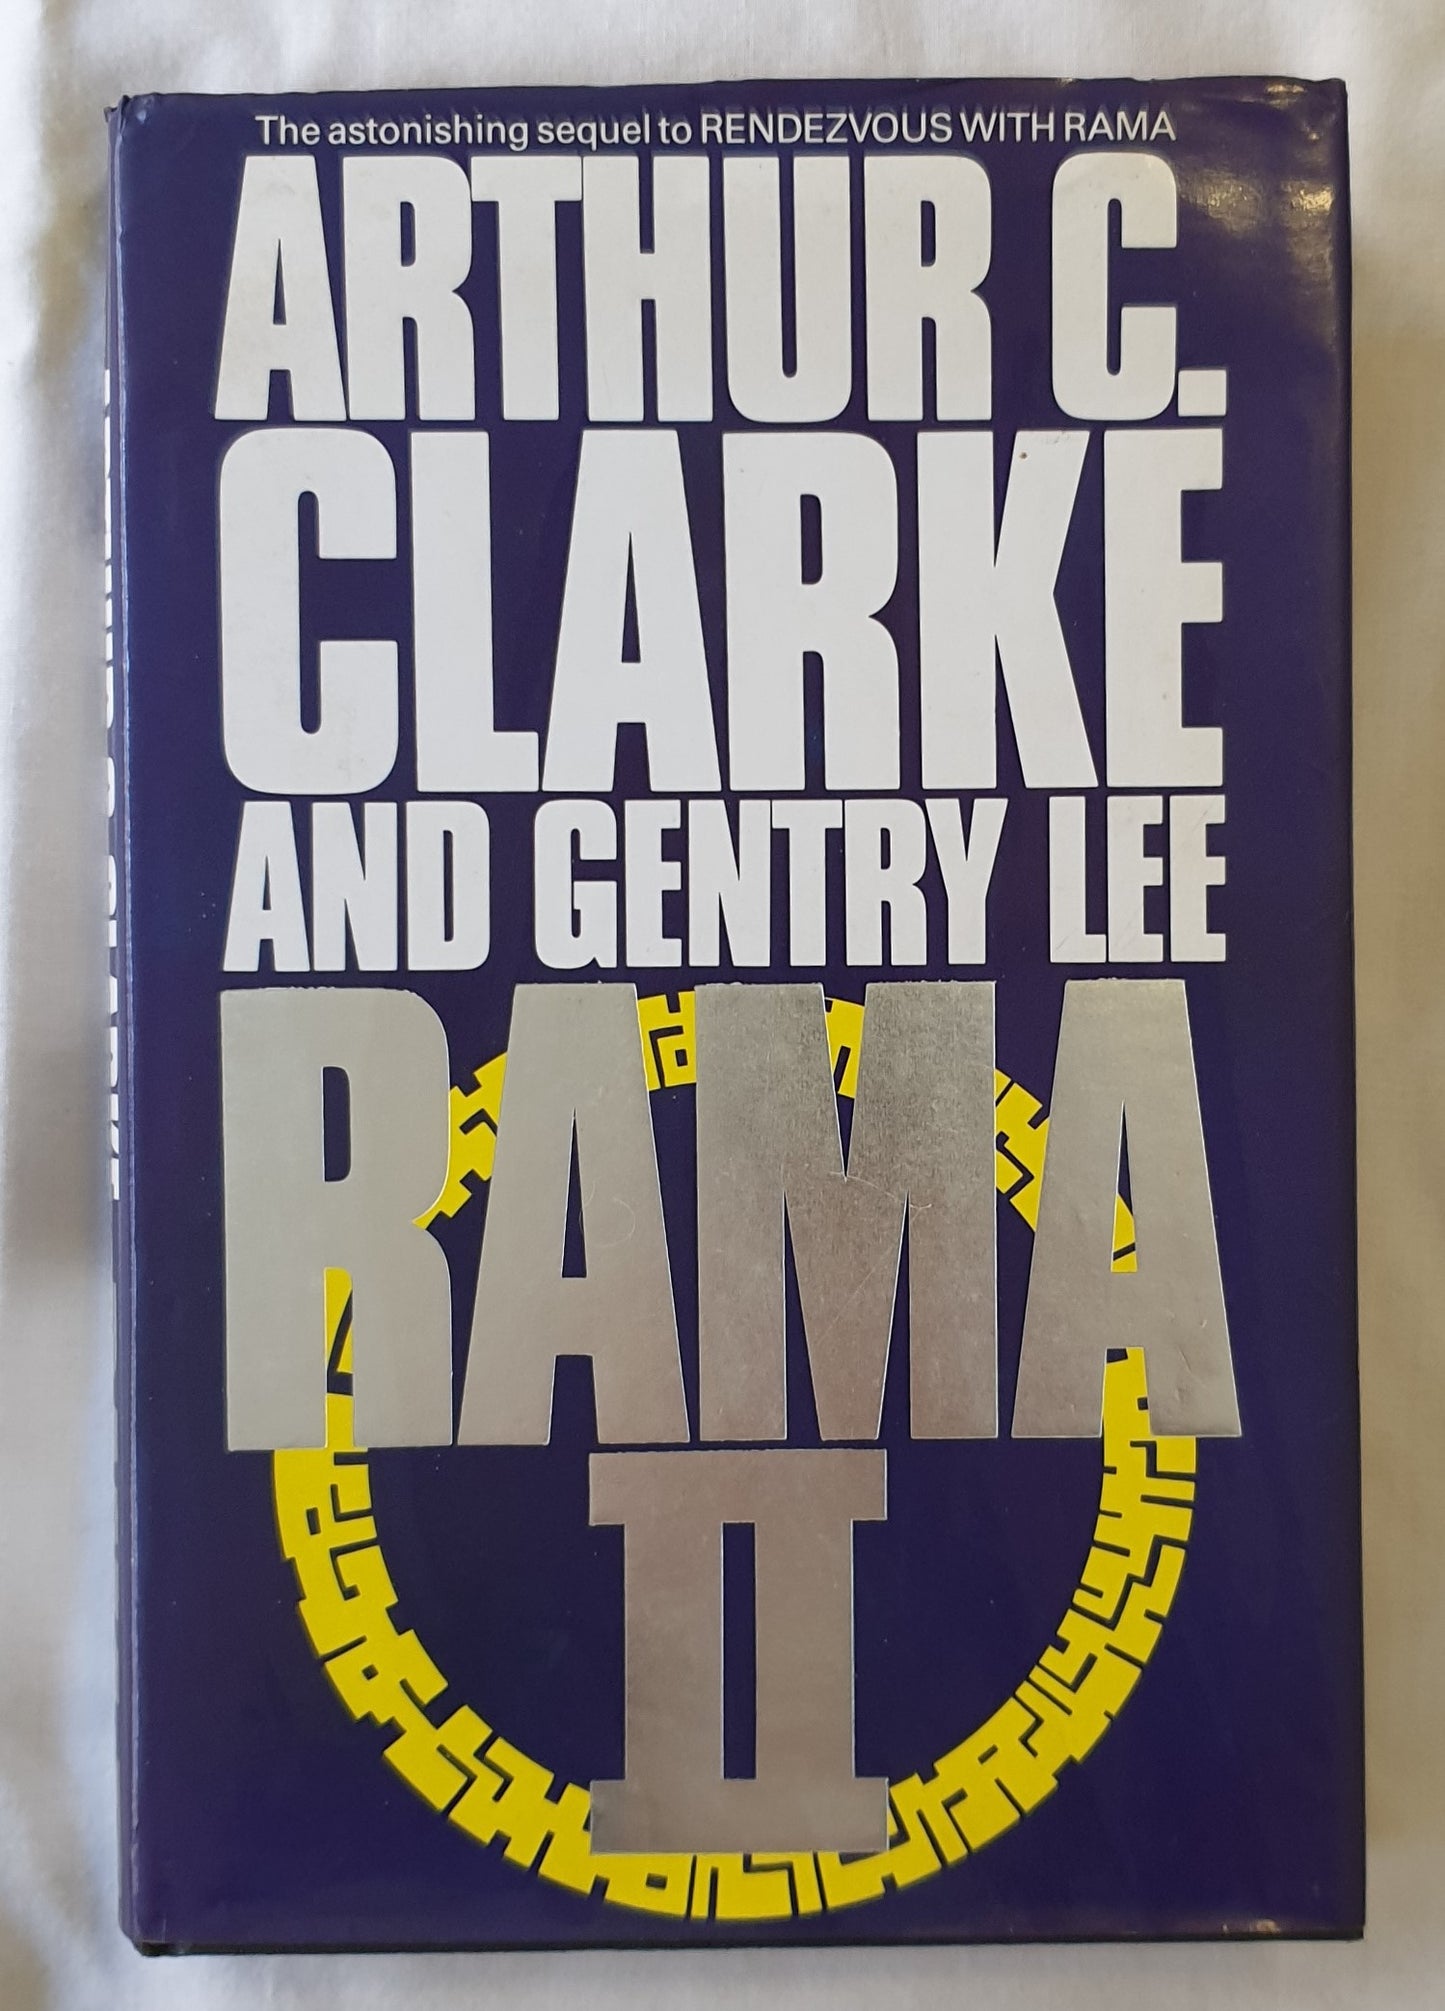 RAMA II by Arthur C. Clarke and Gentry Lee